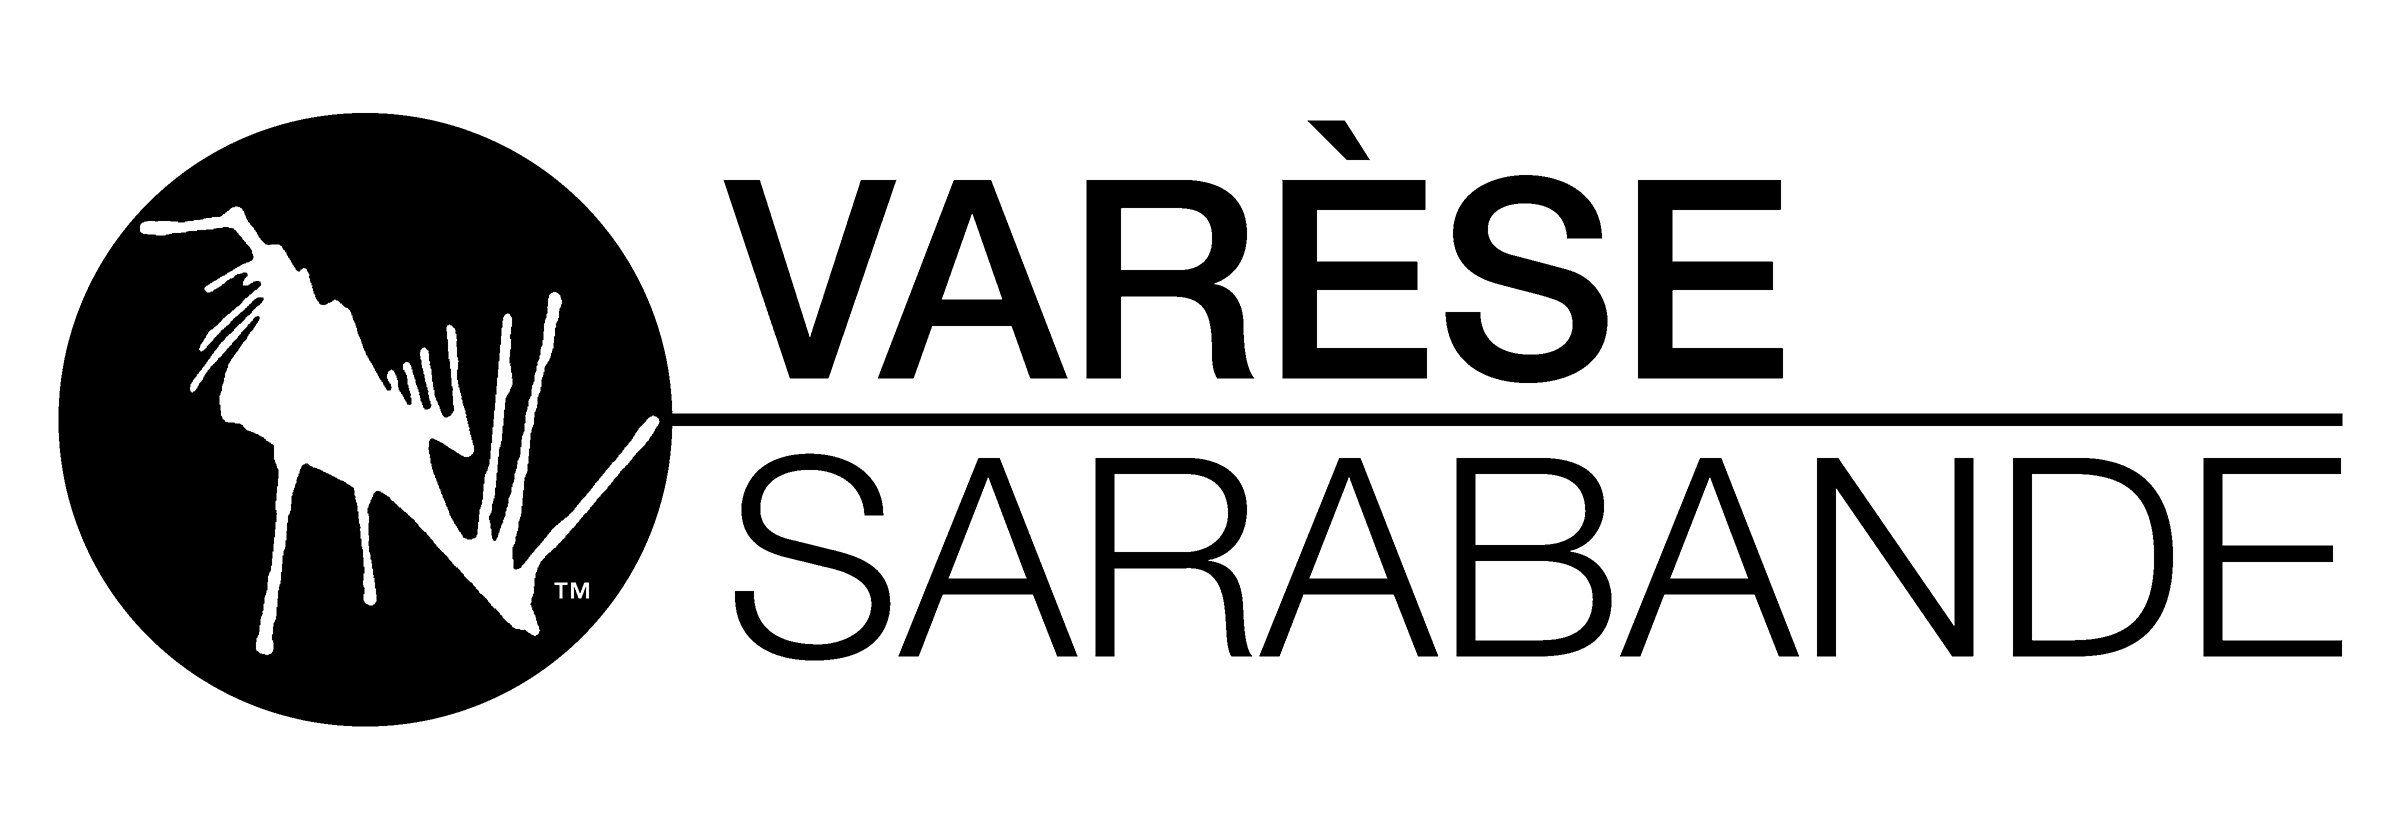 Varese Sarabande Logo - Varèse Sarabande (Creator) - TV Tropes